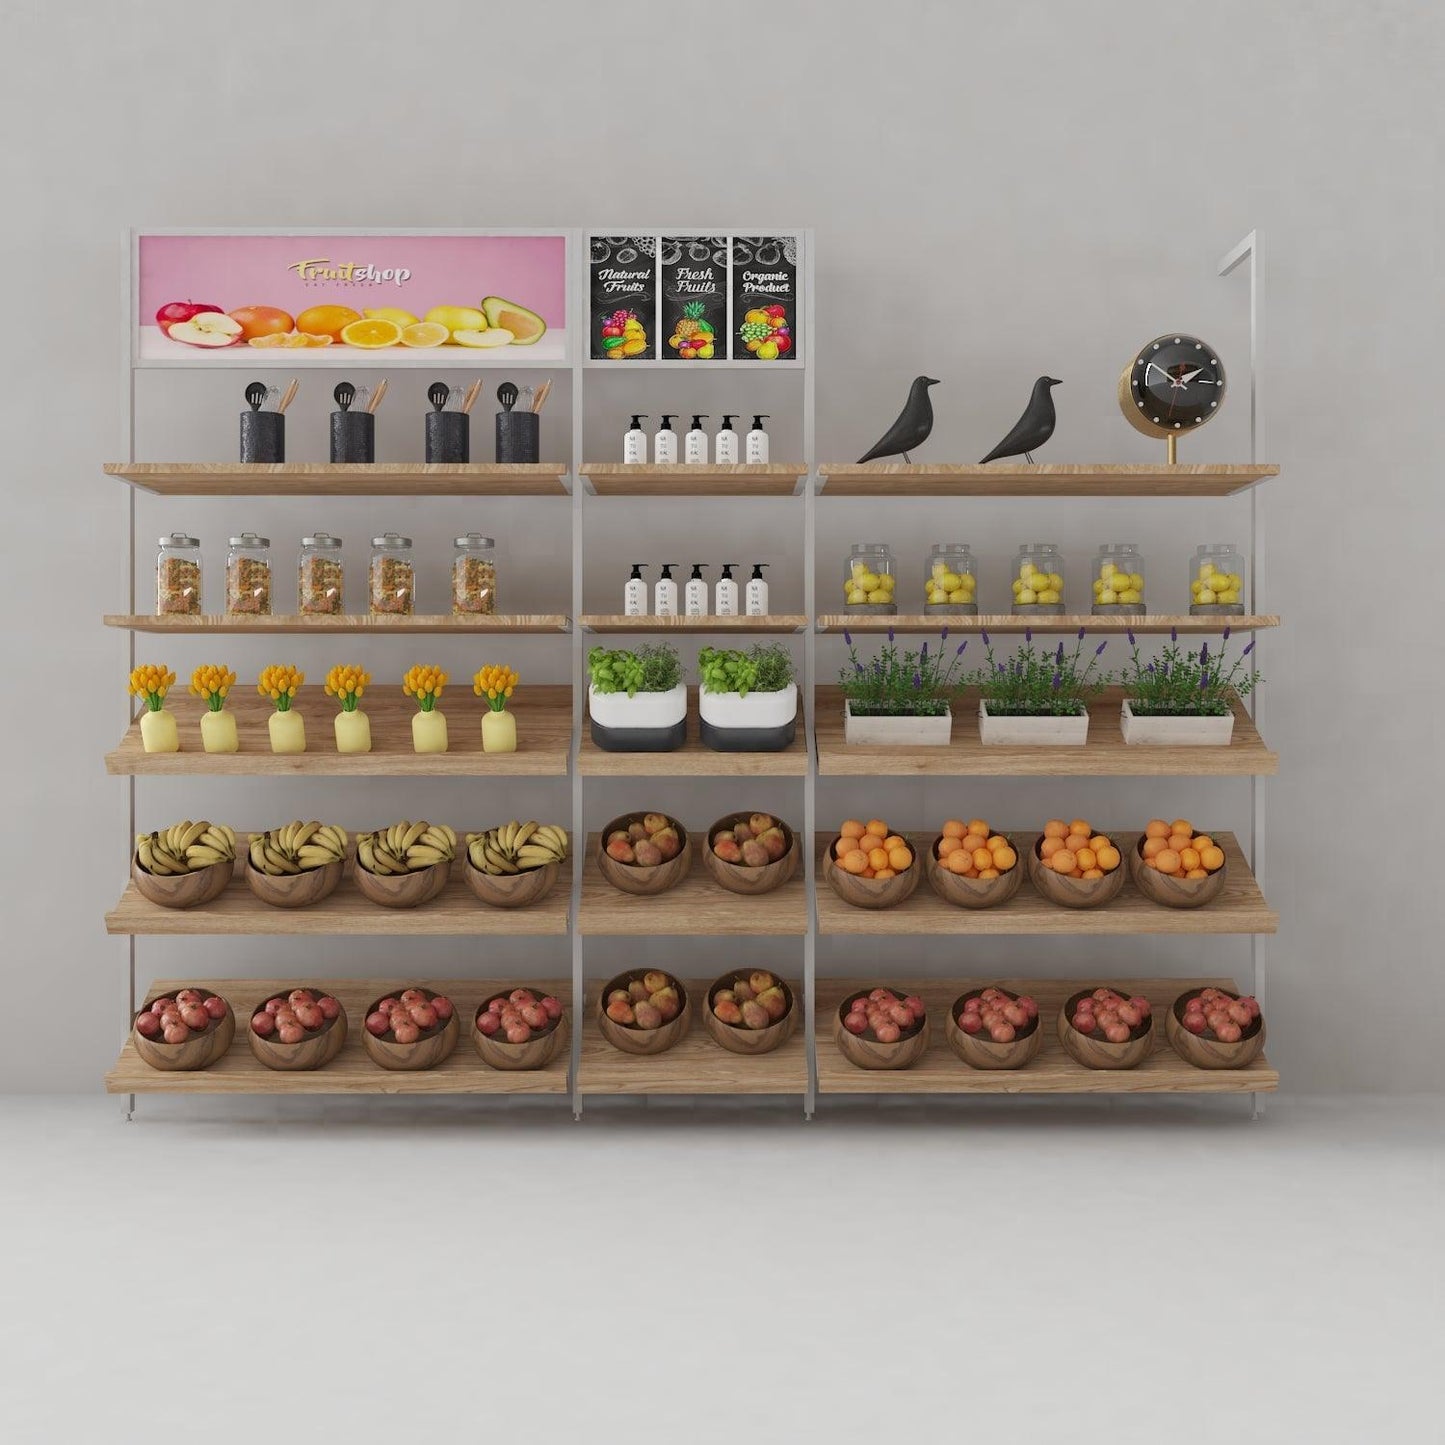 Fresh Foods | Display Rack for Super markets - Fixturic